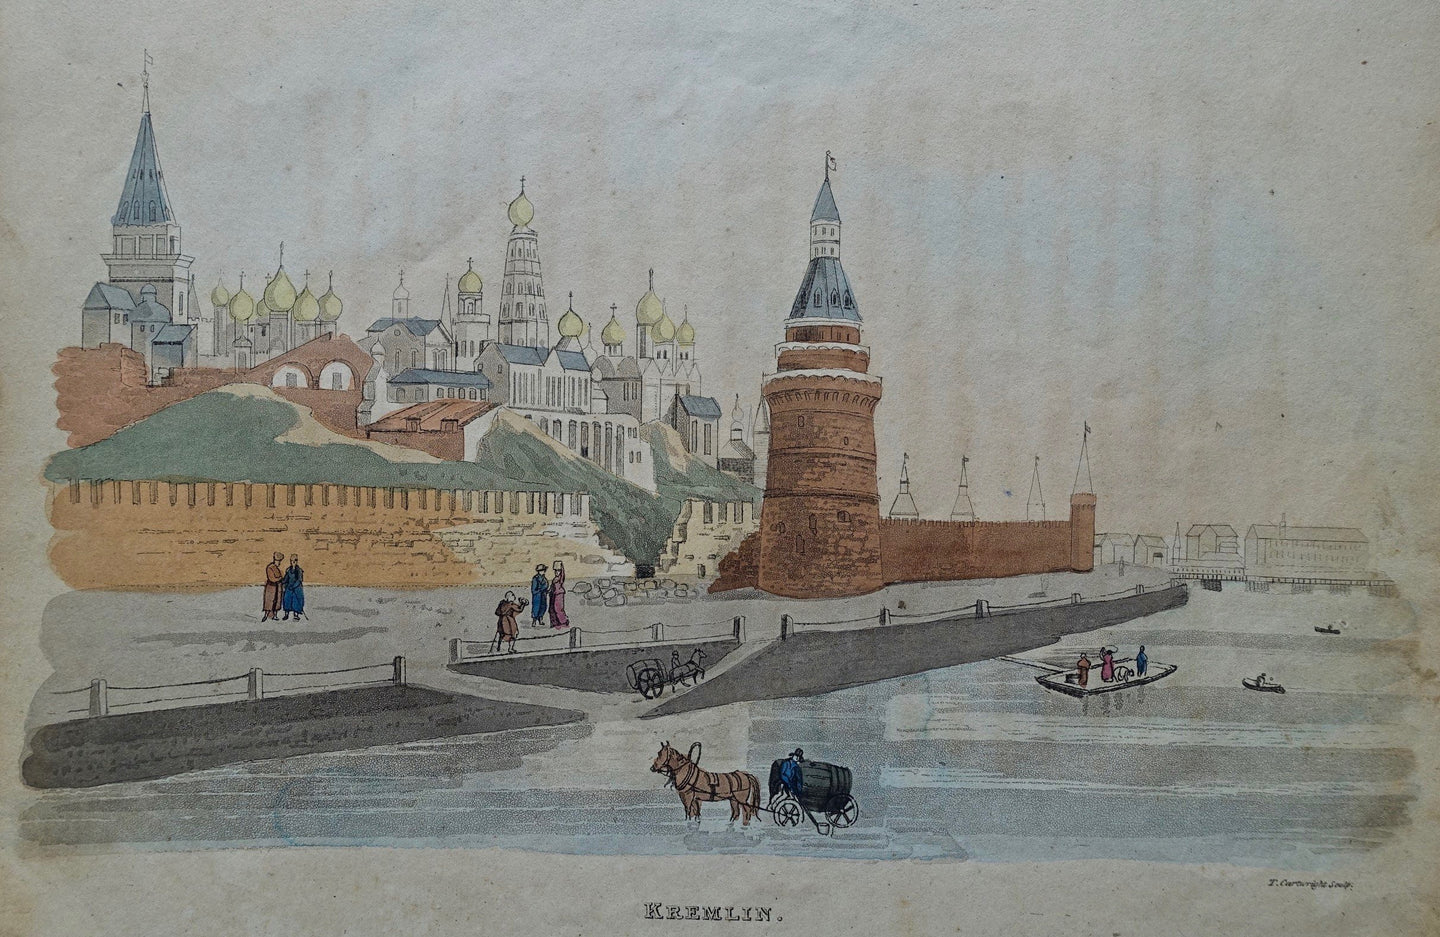 Rusland Moskou Kremlin Moscow Russia - JJ Stockdale - 1815